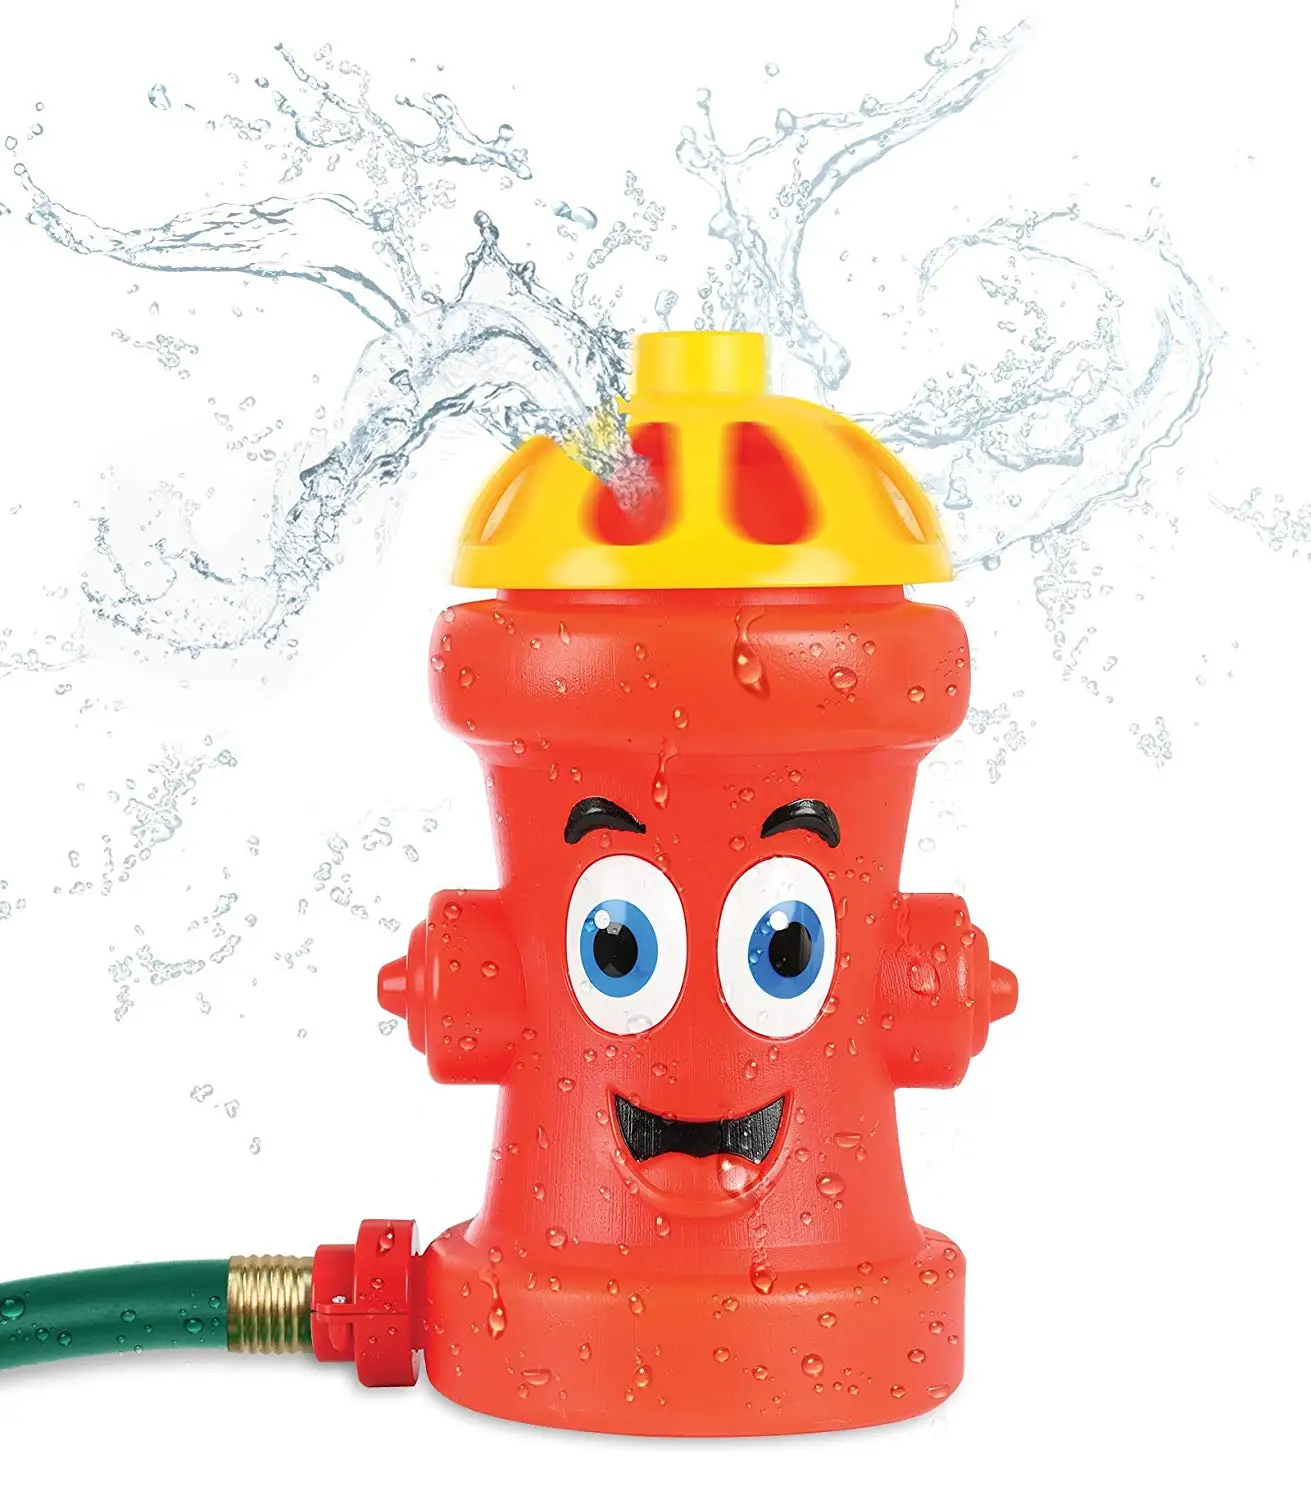 water sprinkler toy